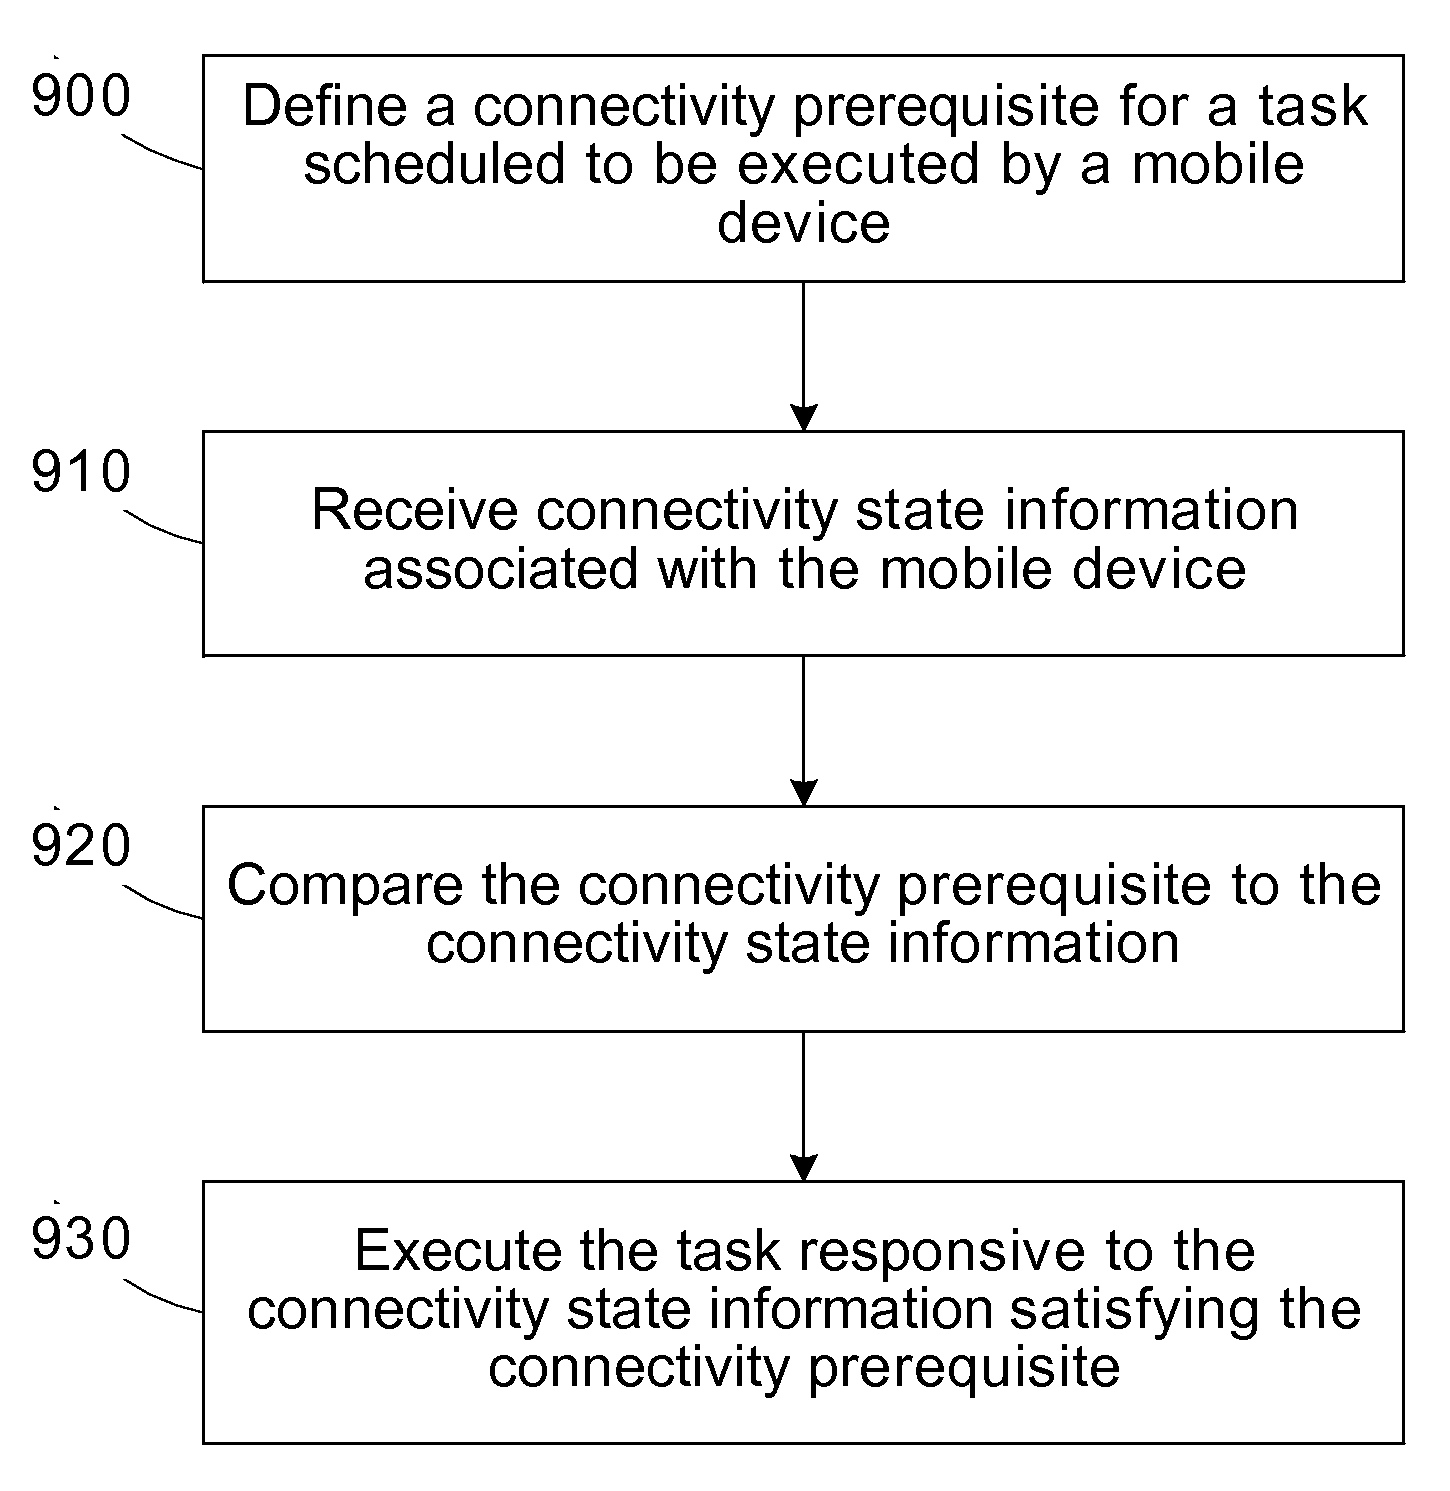 Task scheduler responsive to connectivity prerequisites